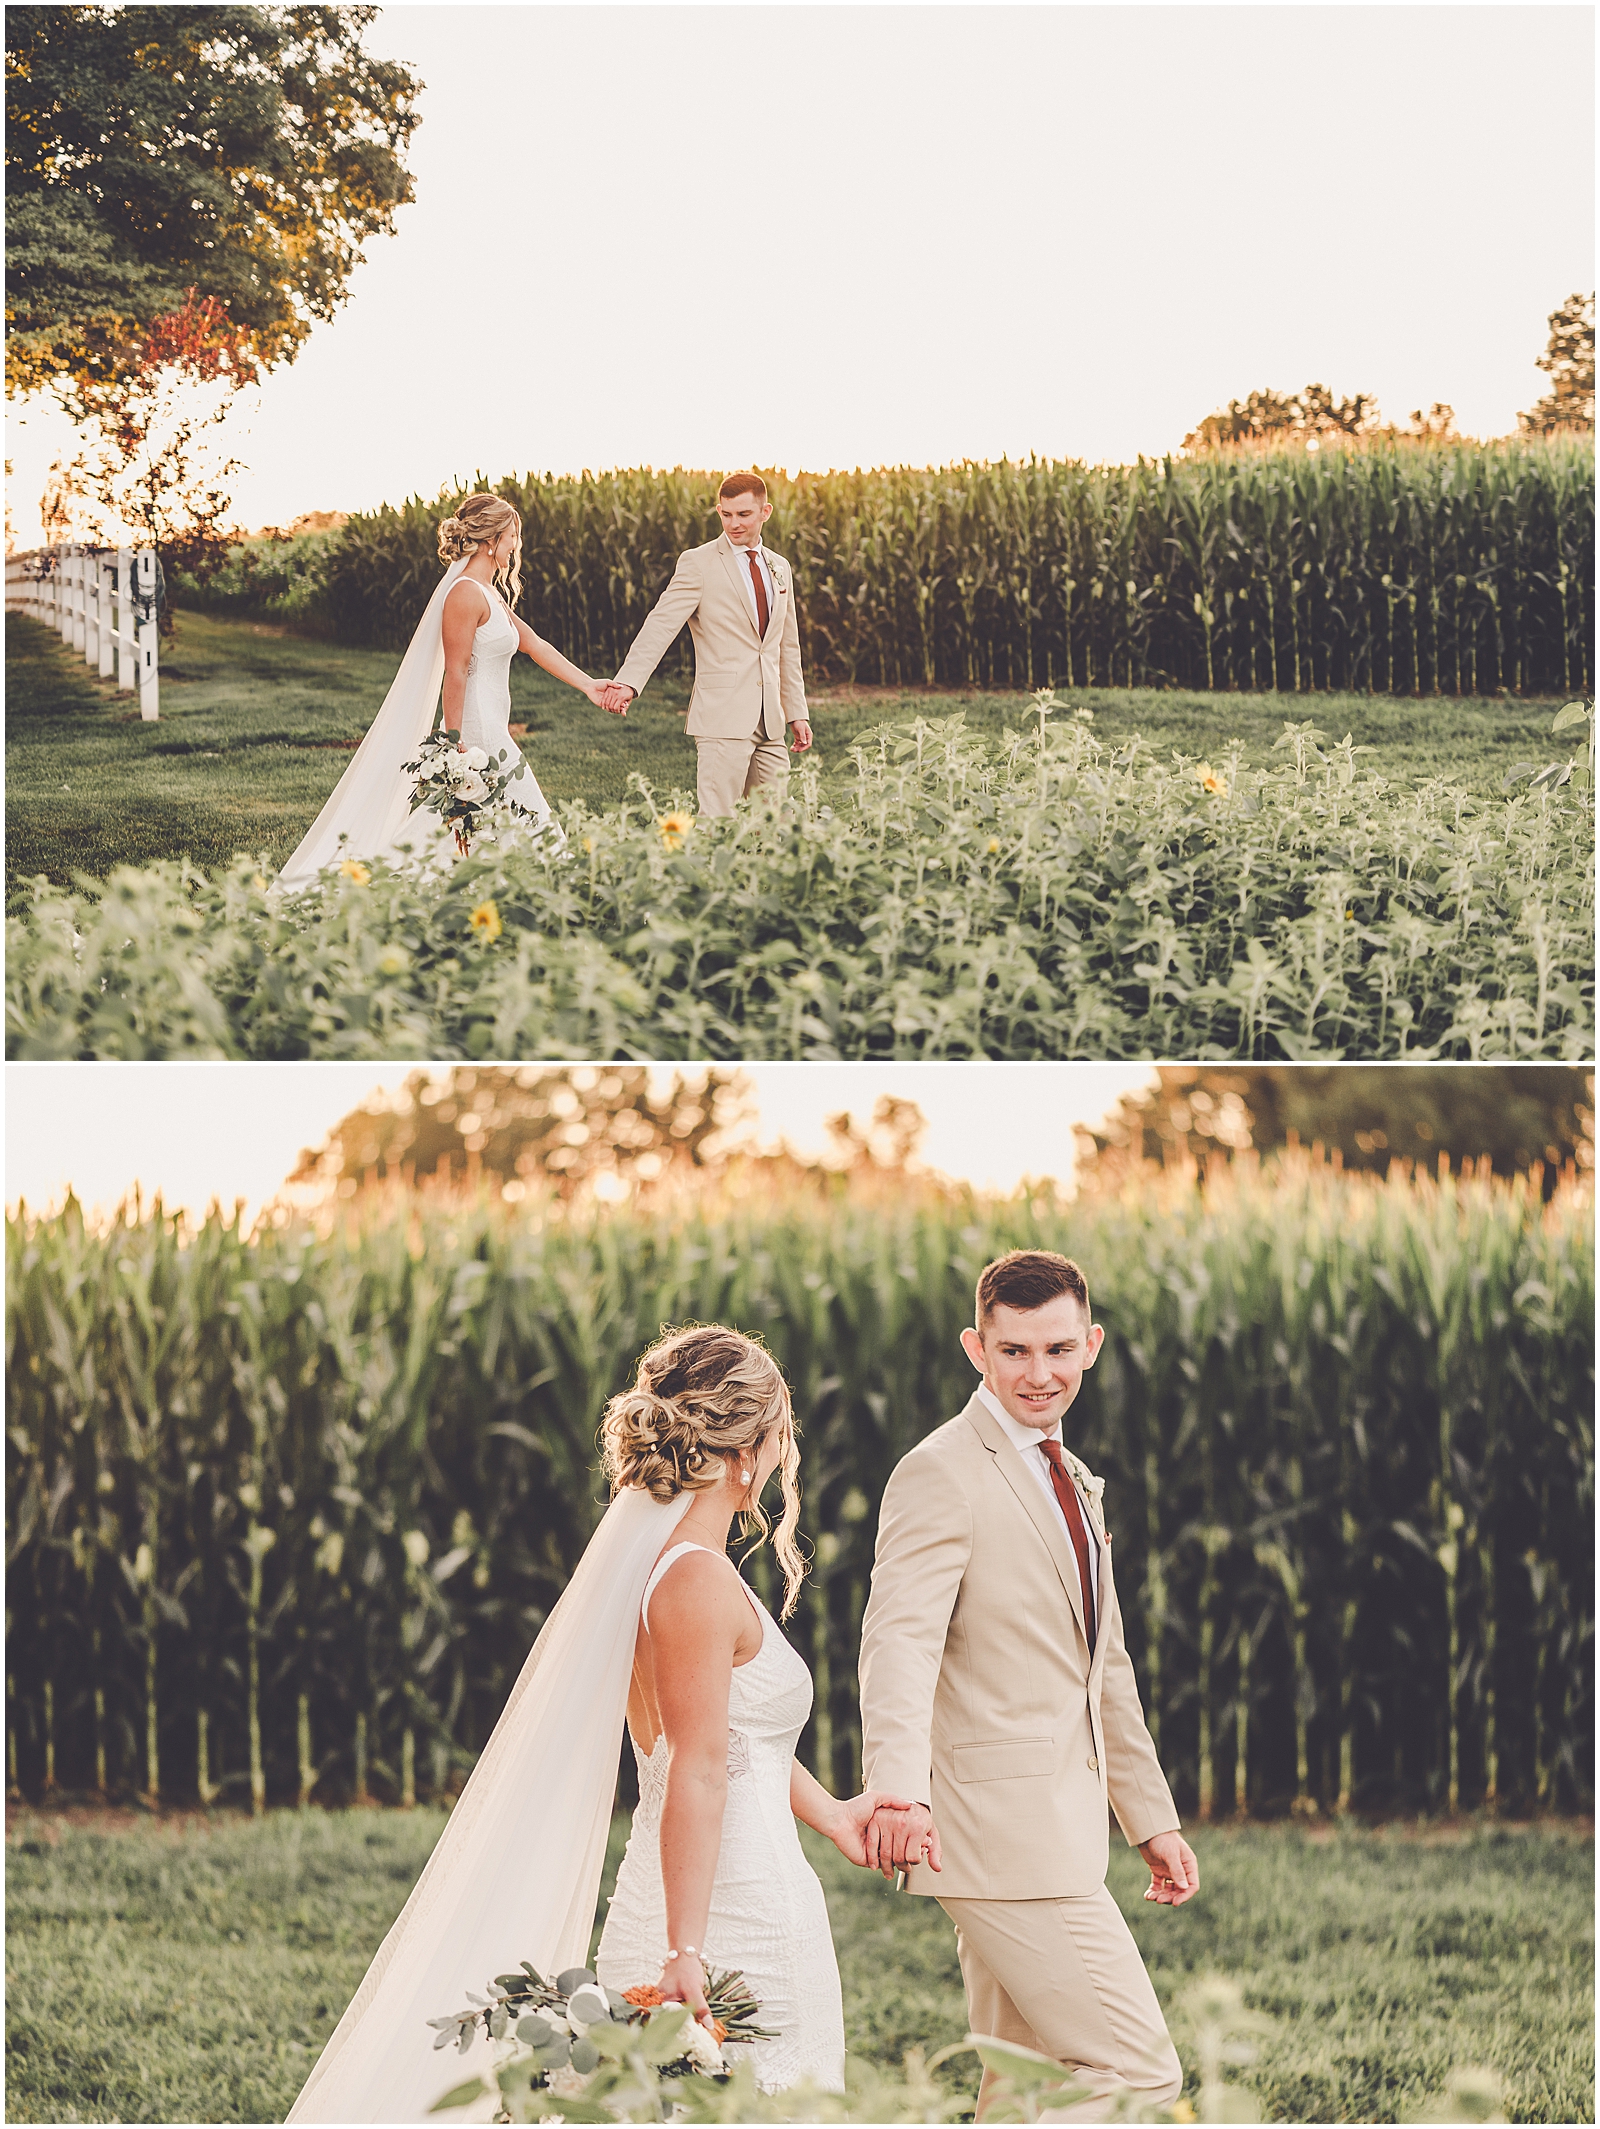 Sidney and Brendan's summer White Oak Farm Venue wedding in Michigan City with Chicagoland wedding photographer Kara Evans Photographer.